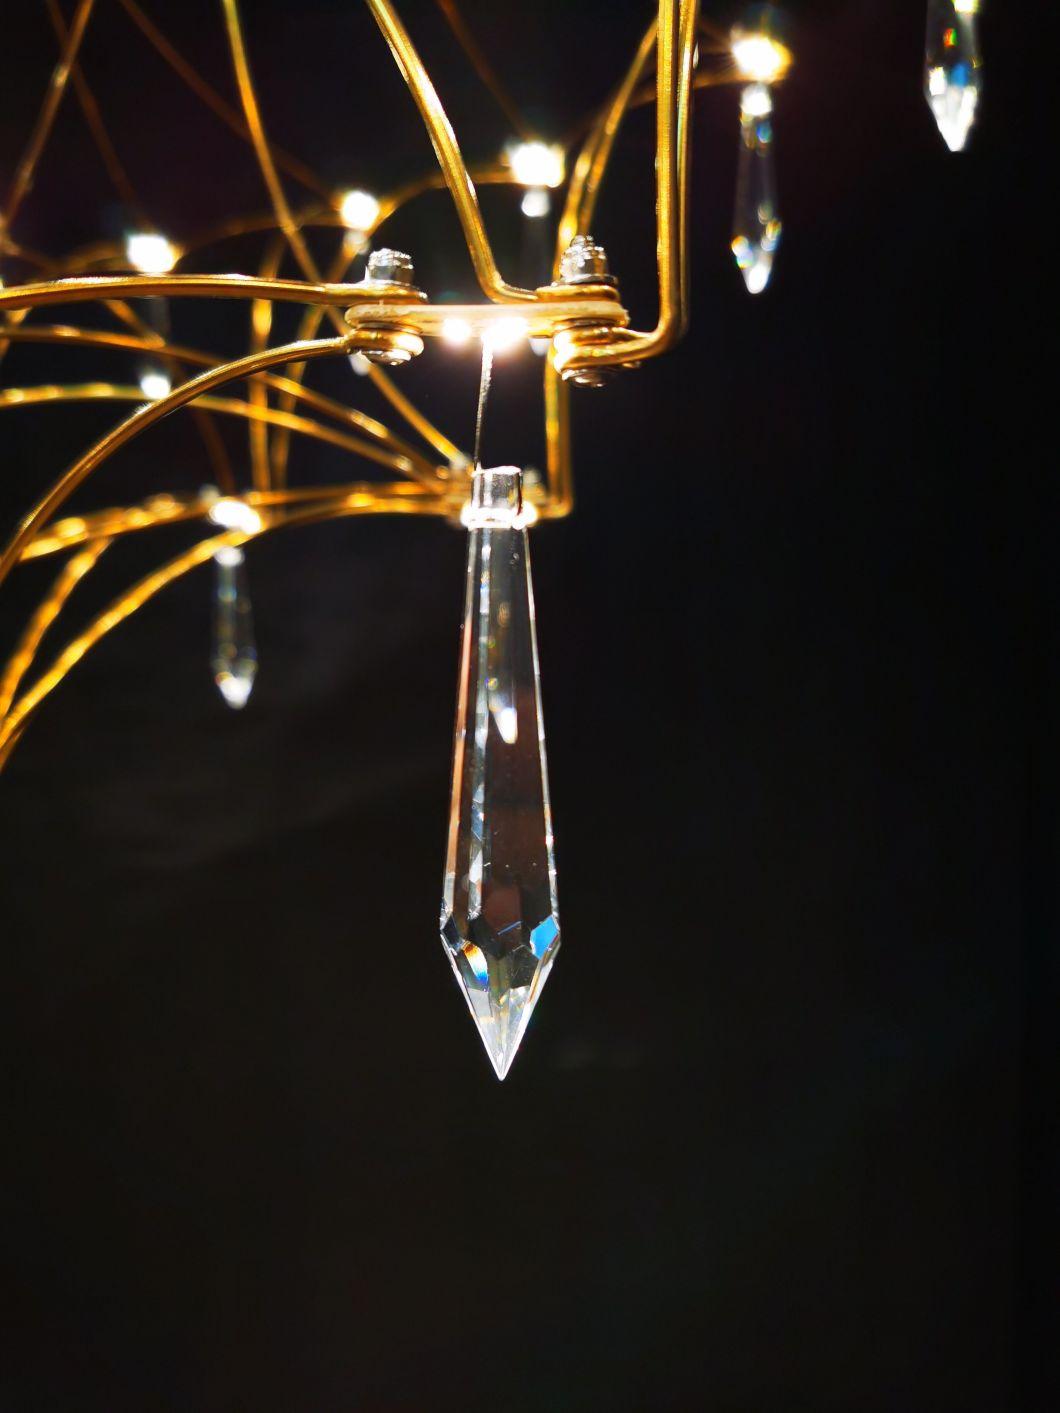 Hot-Selling Wedding Wholesale Crystal Lamp Crystal Chandelier Lighting